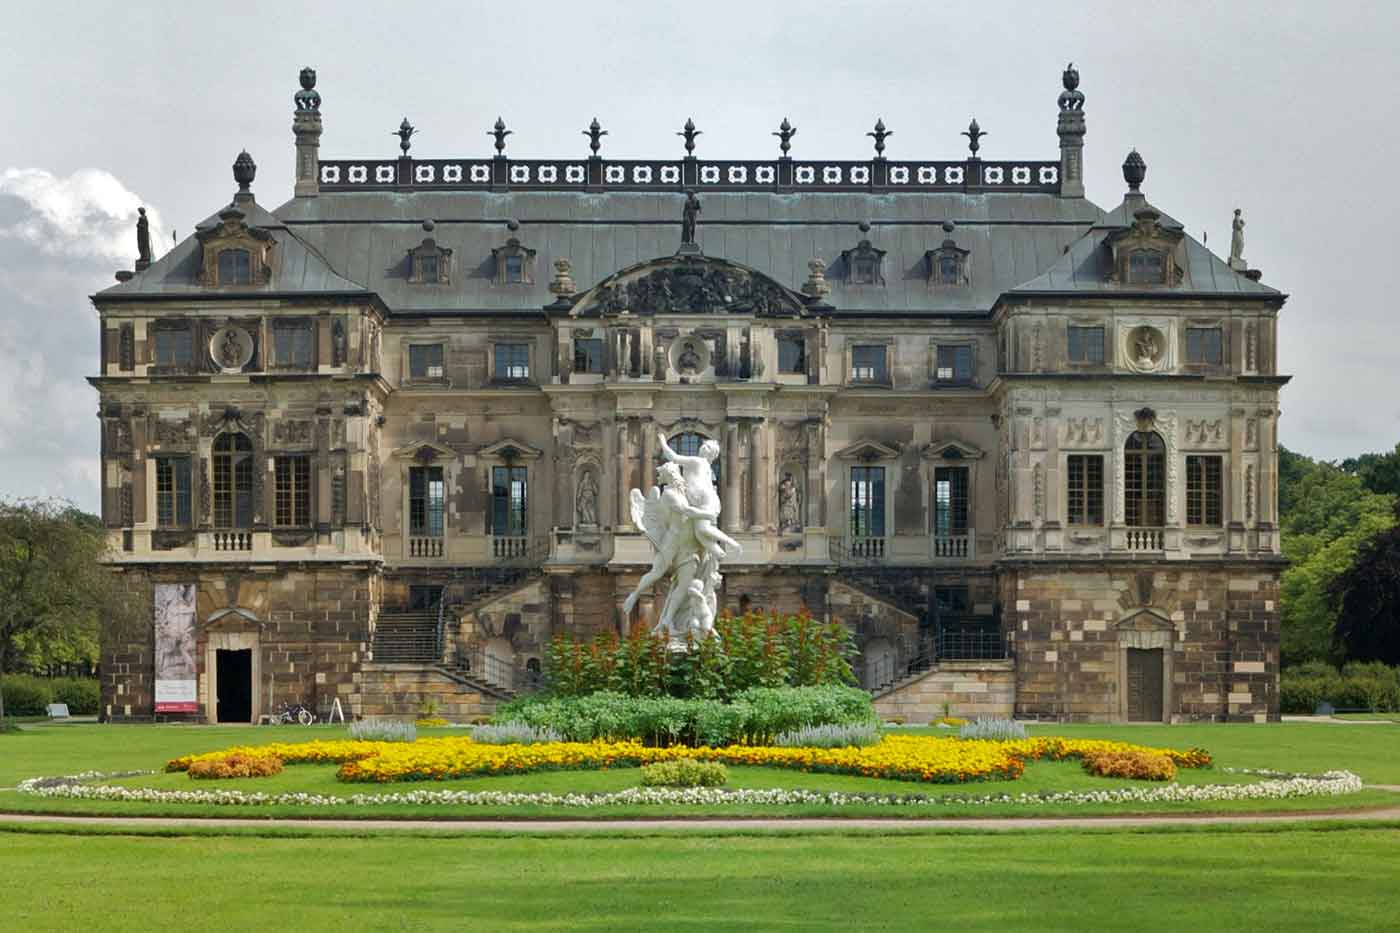 The Grand Garden of Dresden